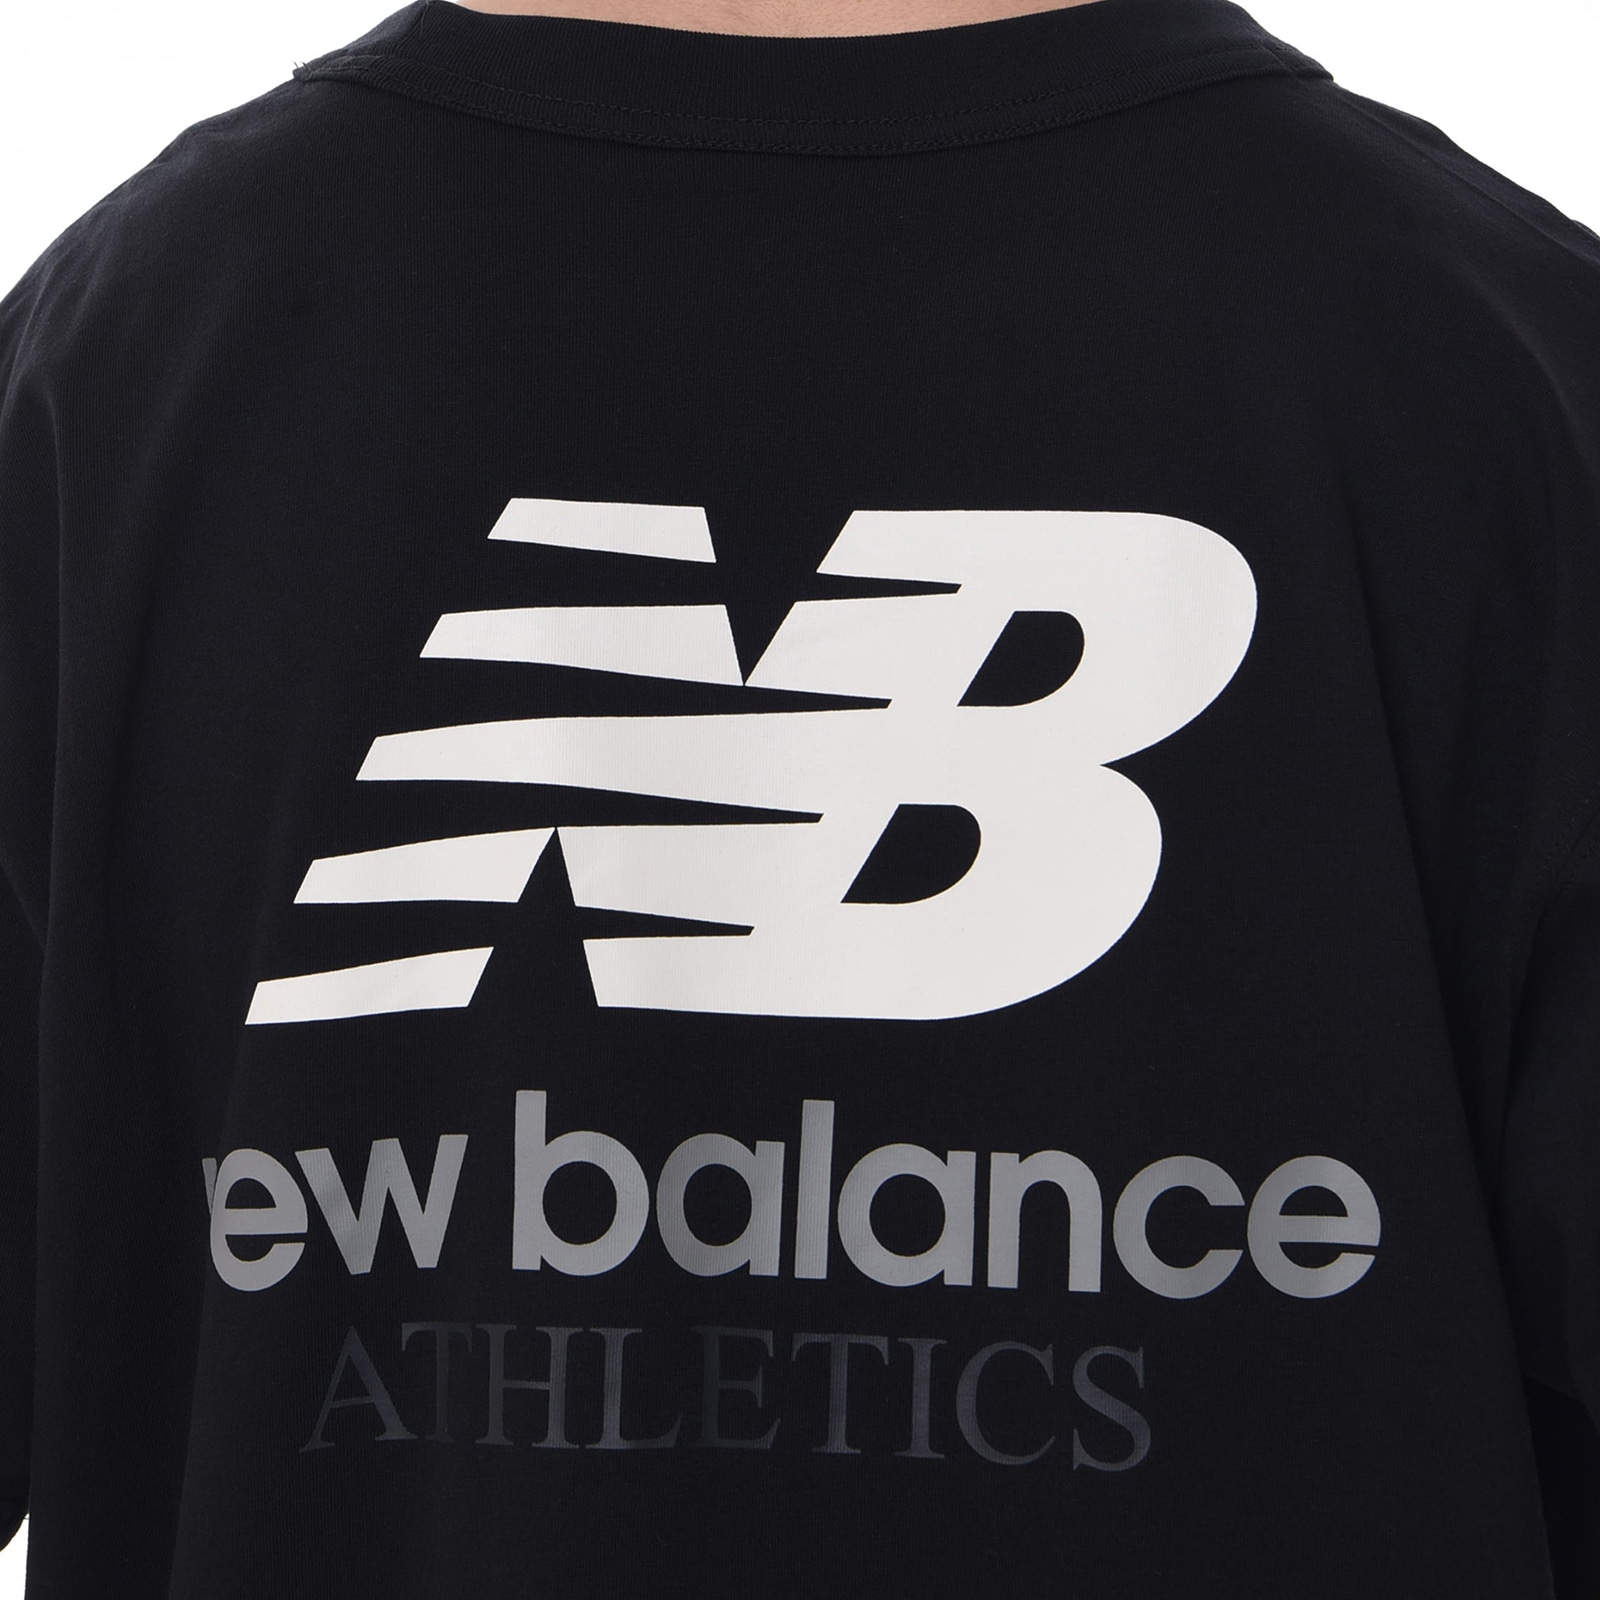 NB Athletics Graphic Short Sleeve T-Shirt